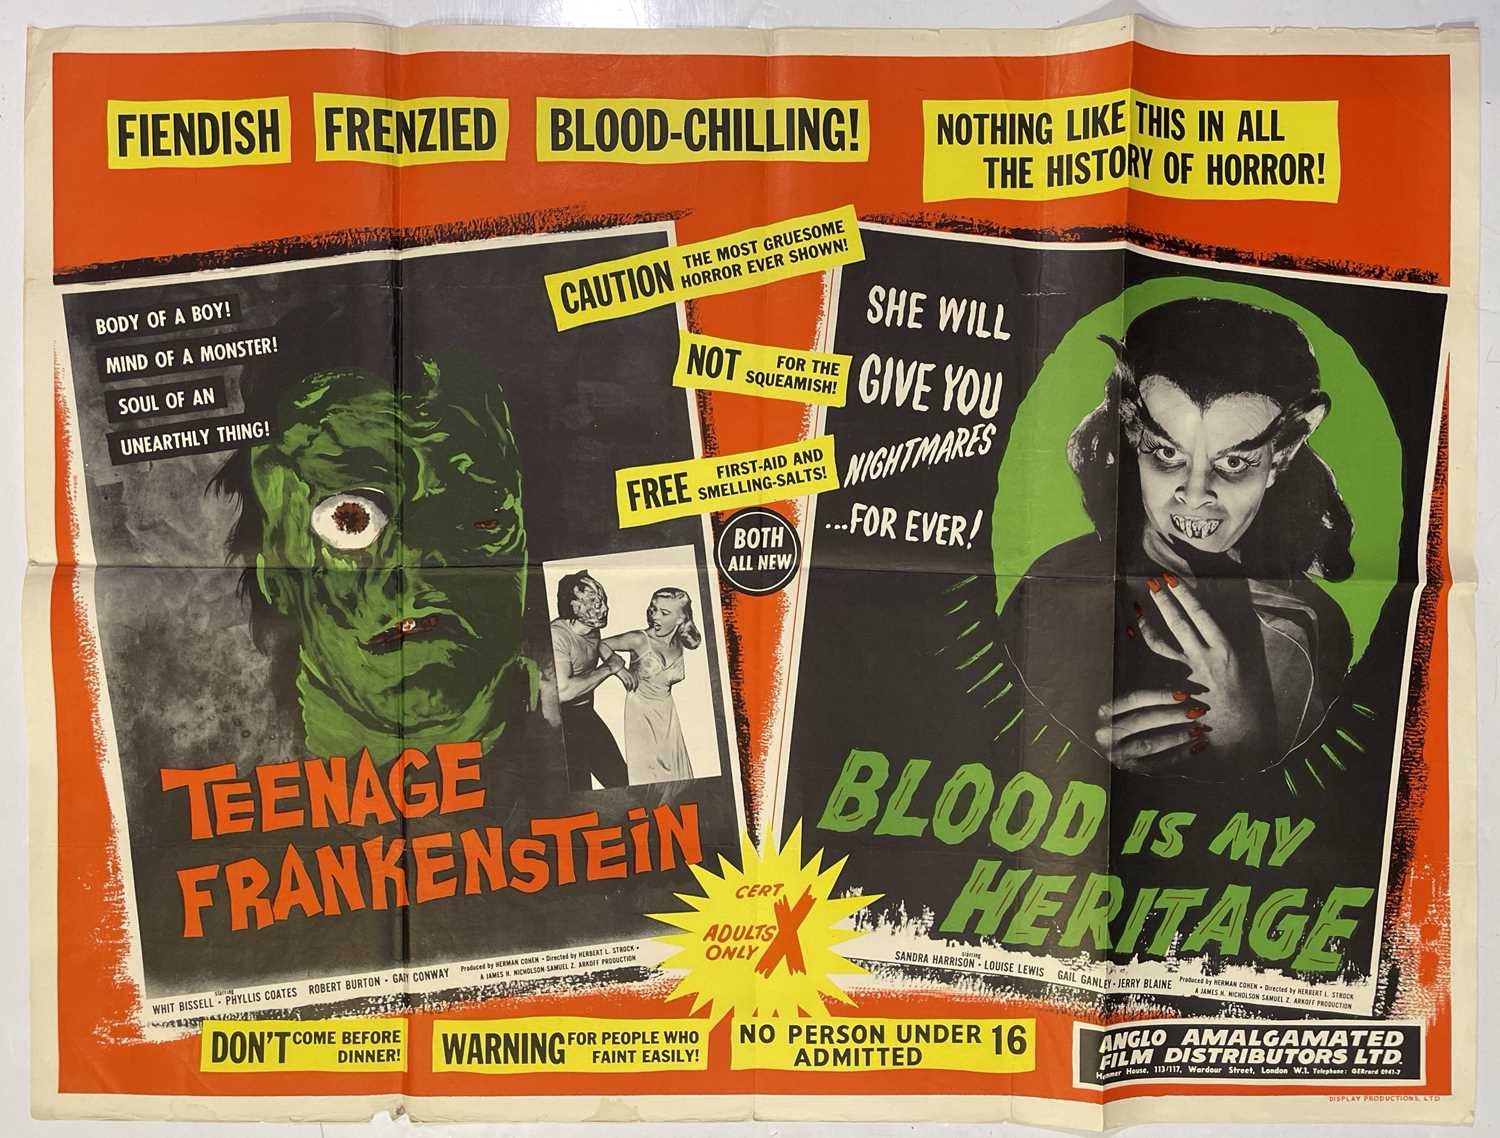 TEENAGE FRANKENSTEIN / BLOOD IS MY HERITAGE (1957) - ORIGINAL UK QUAD POSTER.